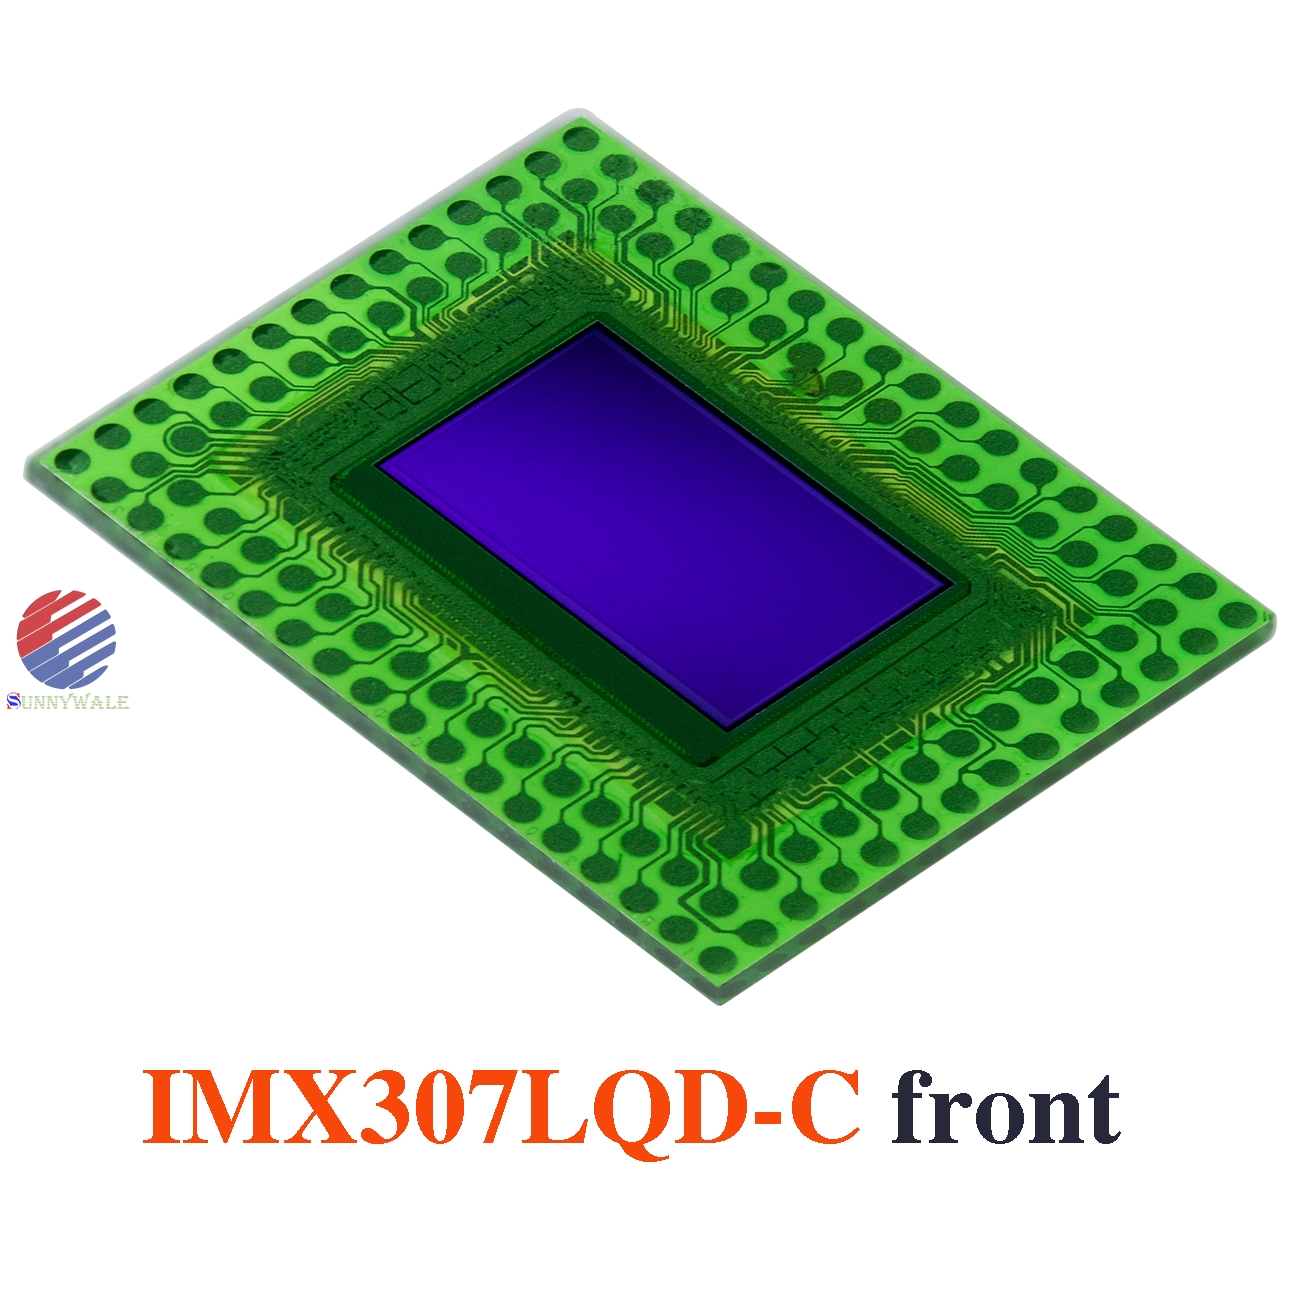 IMX307LQD-C, IMX307LQR-C, SONY 2MPCMOS, 1080P@60fps, 1/2.8 CMOS solid-state image sensor, for color security  cameras